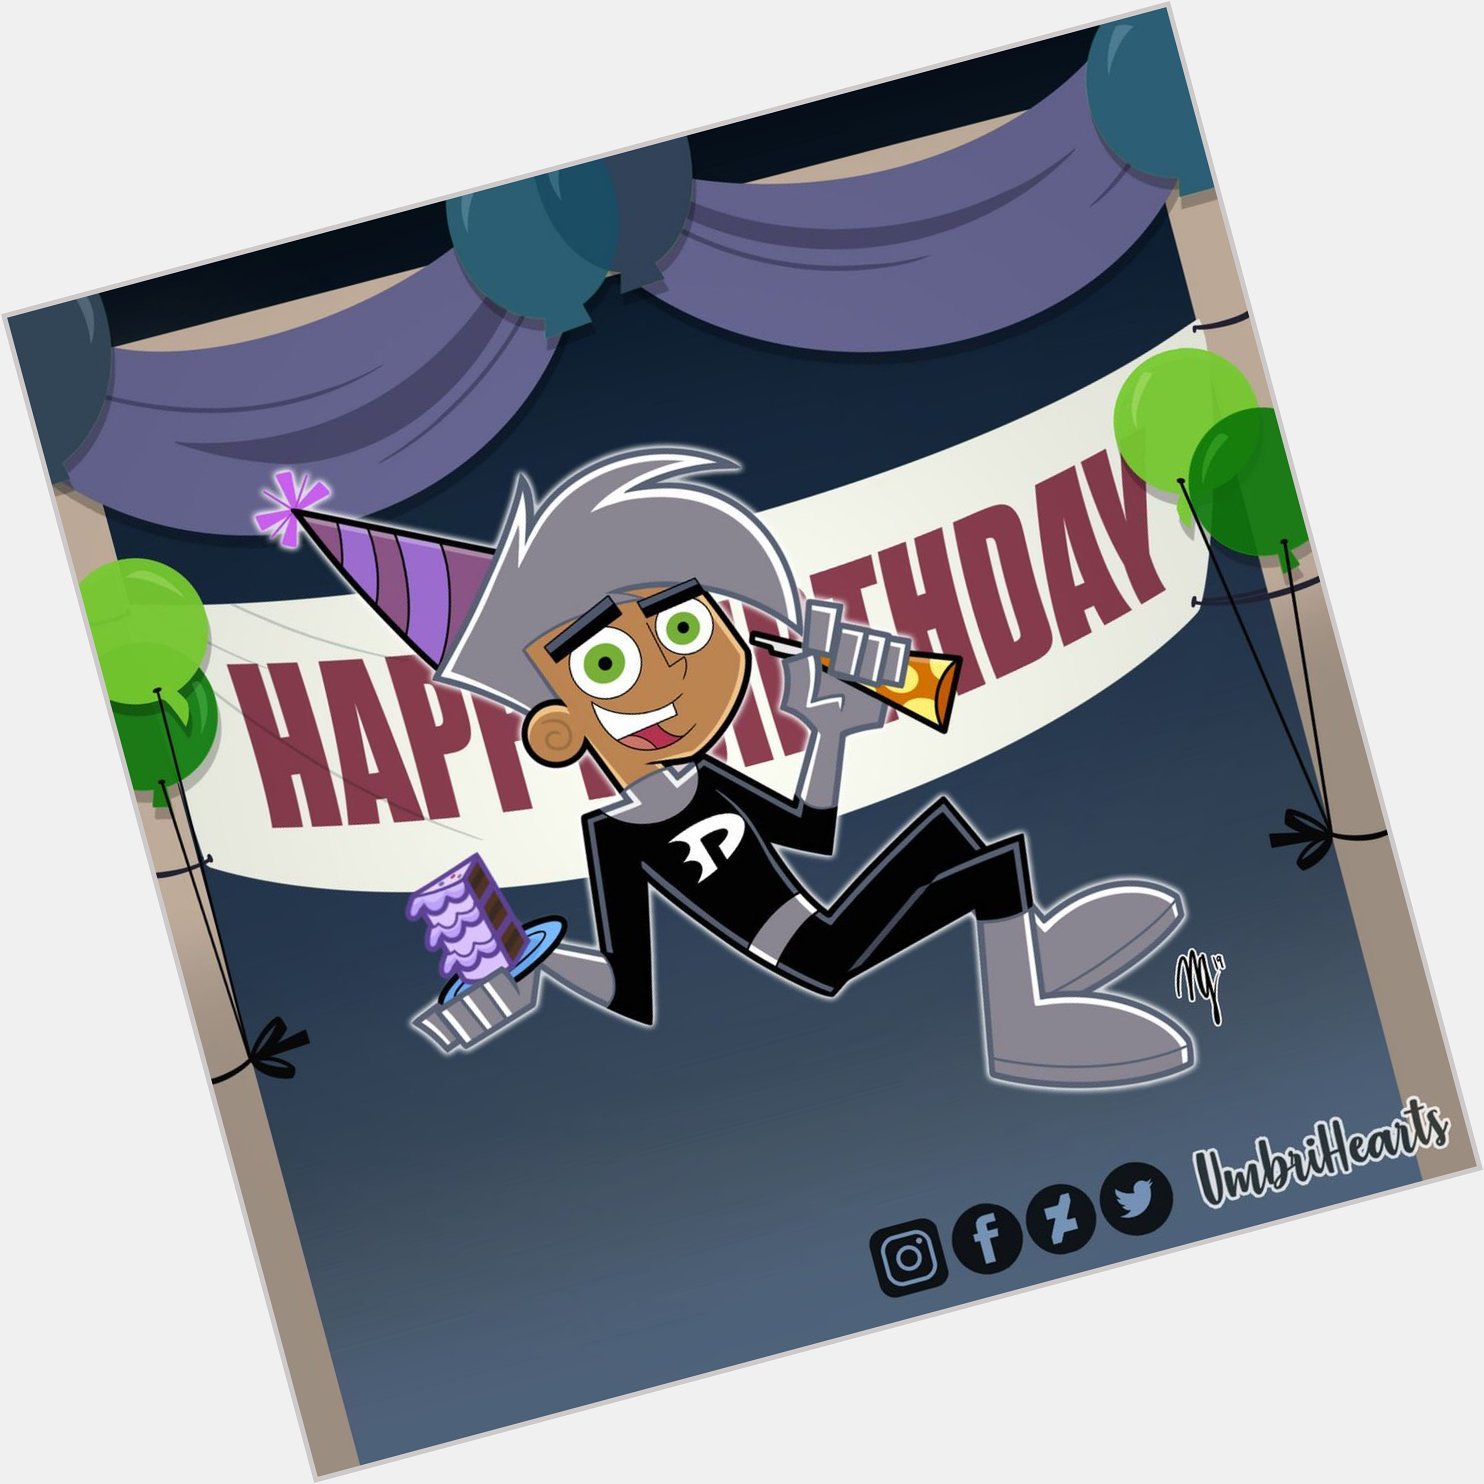  Happy birthday butch hartman 